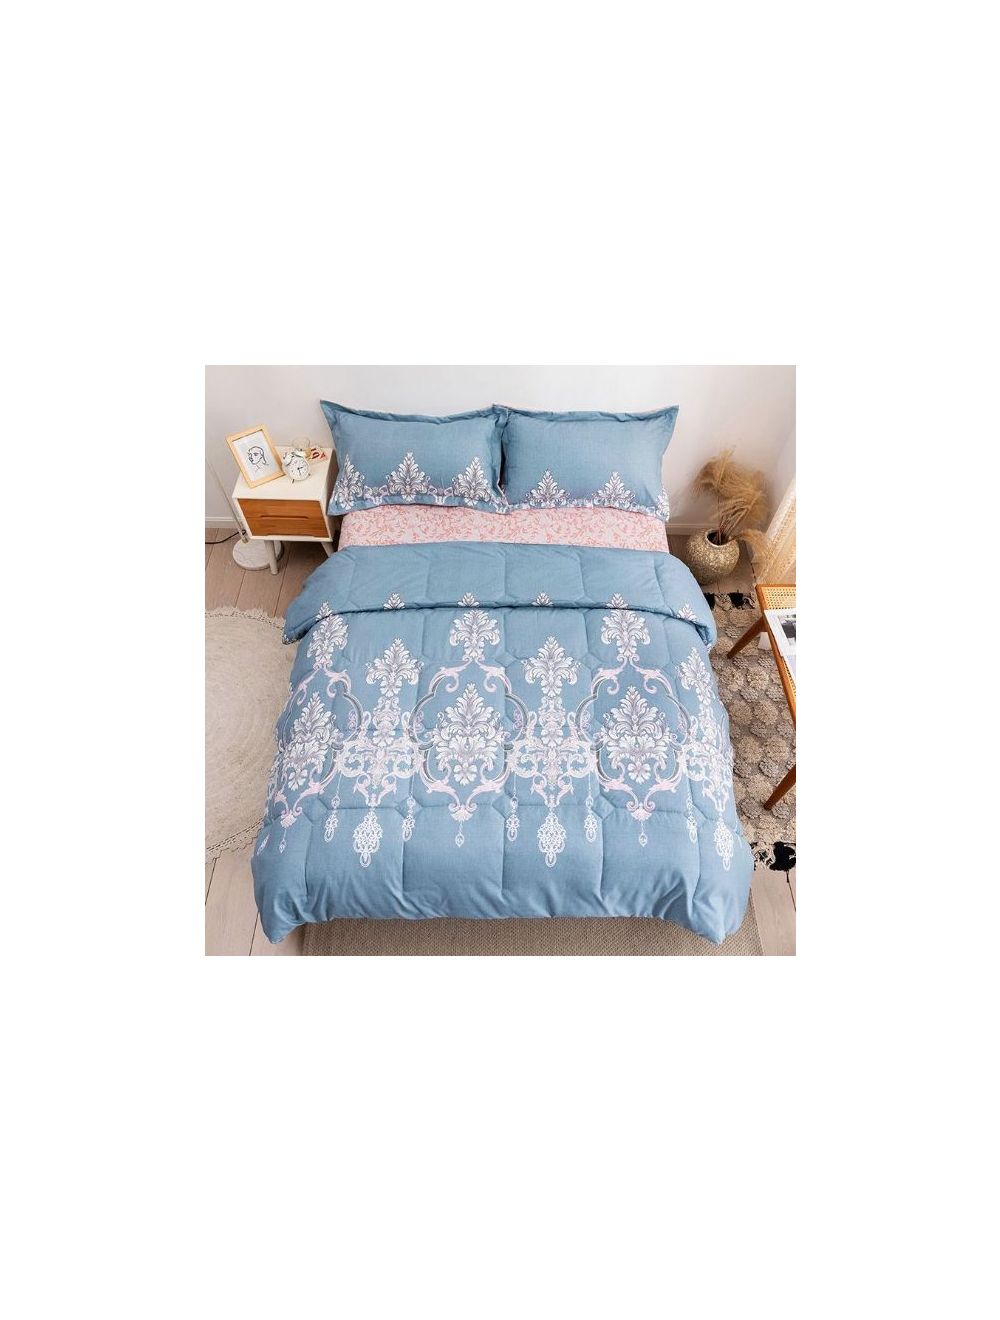 Rishahome 4 Piece King Size Comforter Set Microfiber Grey 220x240cm-BGRCS0005